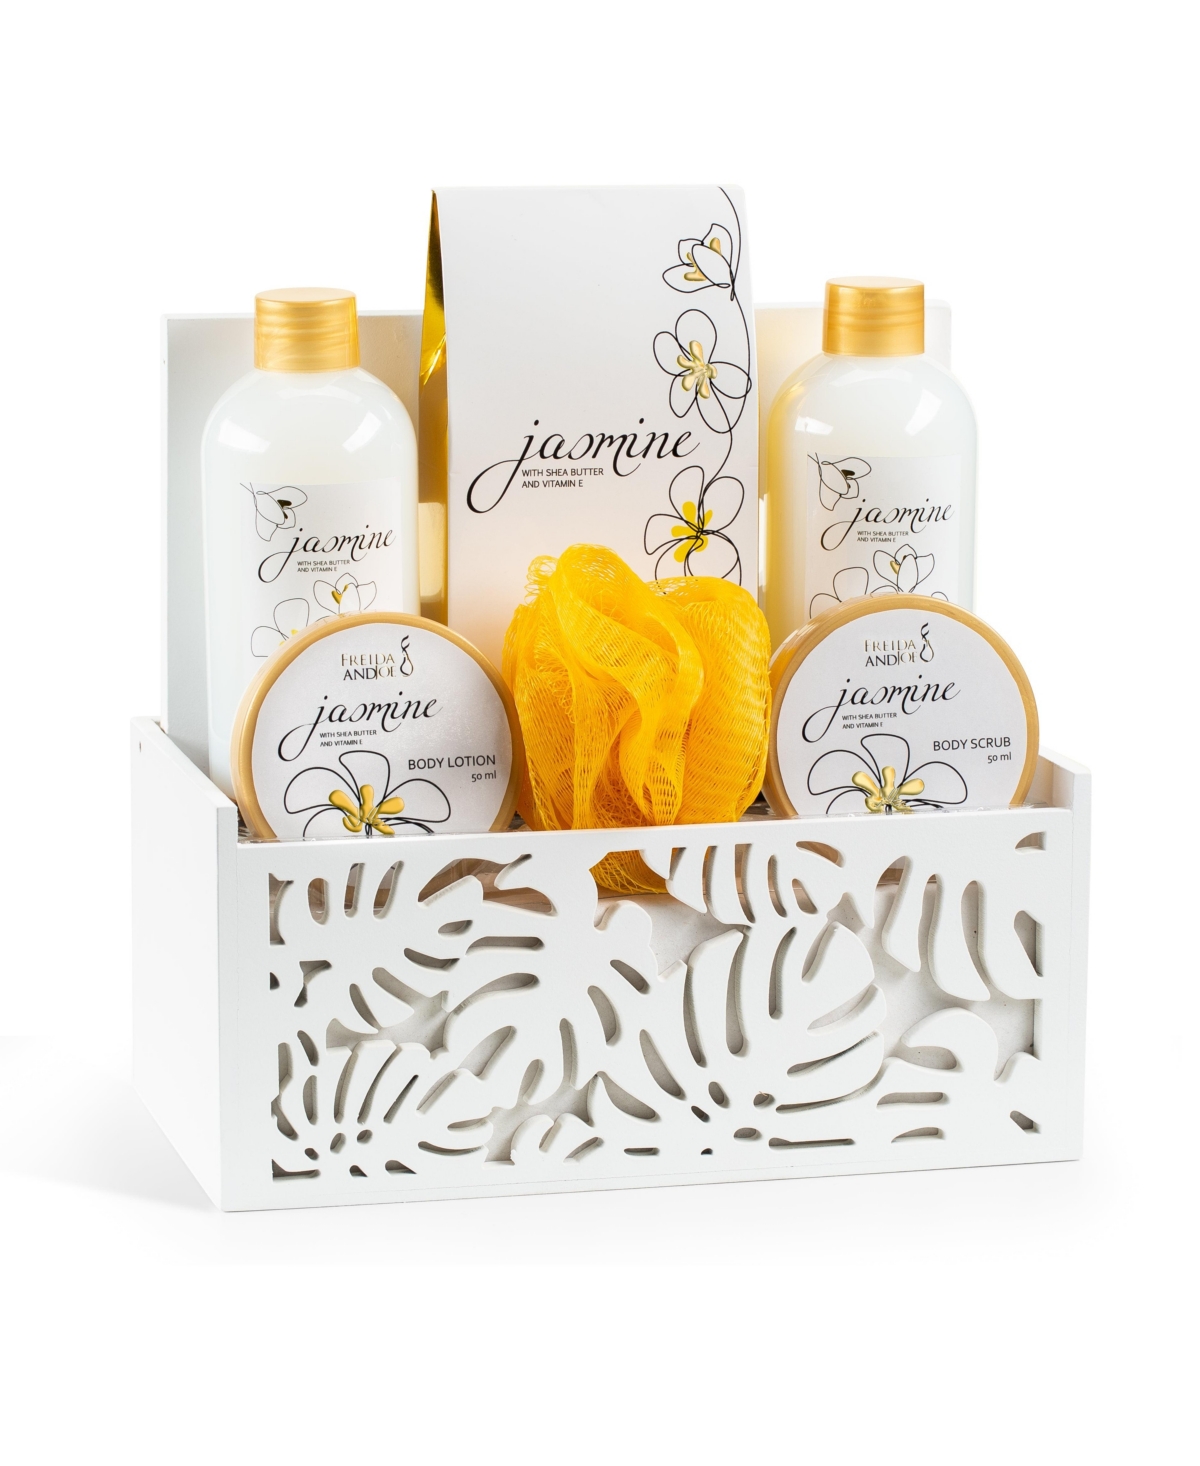 Jasmine Fragrance Bath & Body Set in White Tissue Box - White